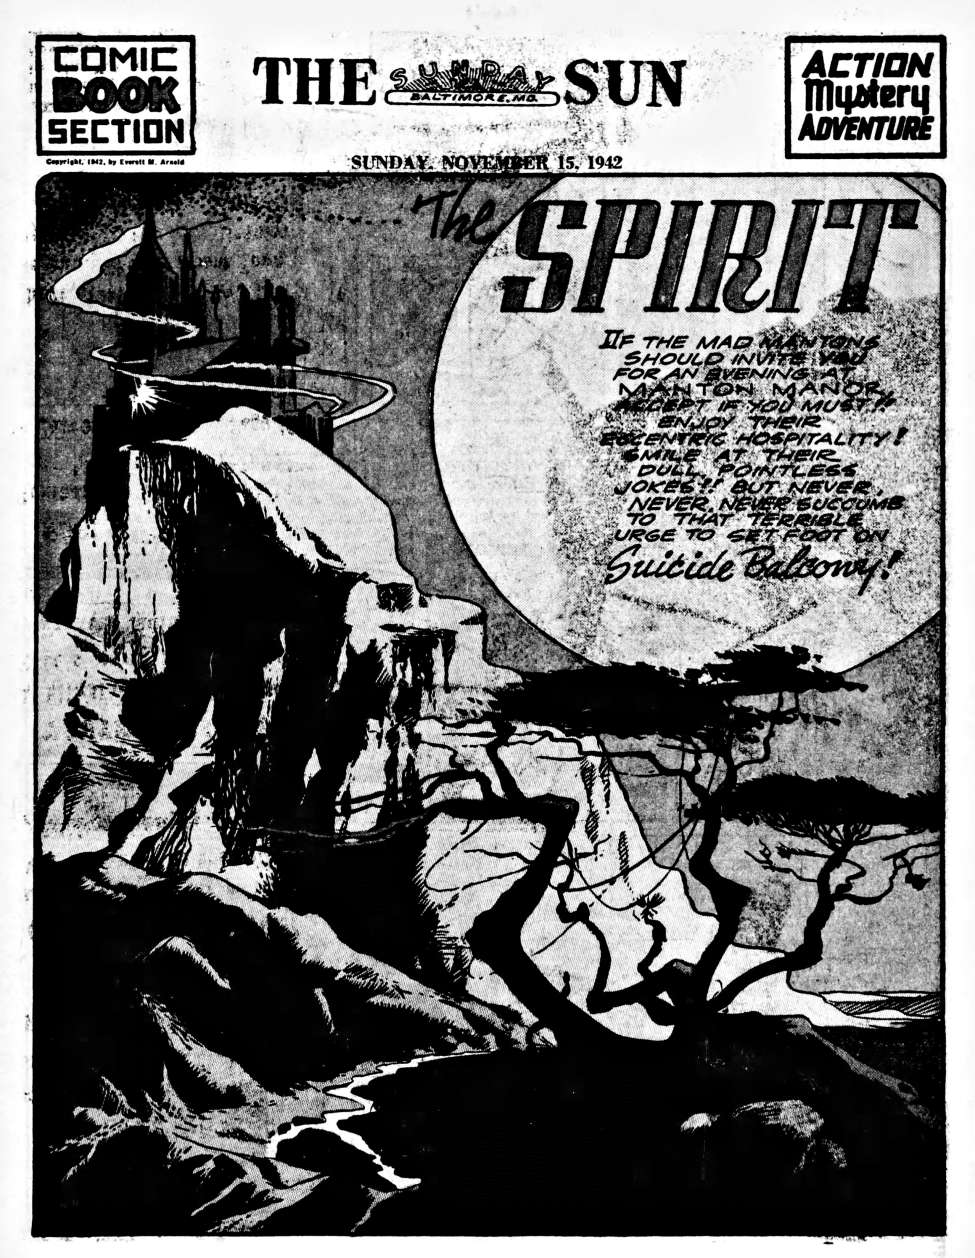 Comic Book Cover For The Spirit (1942-11-15) - Baltimore Sun (b/w)